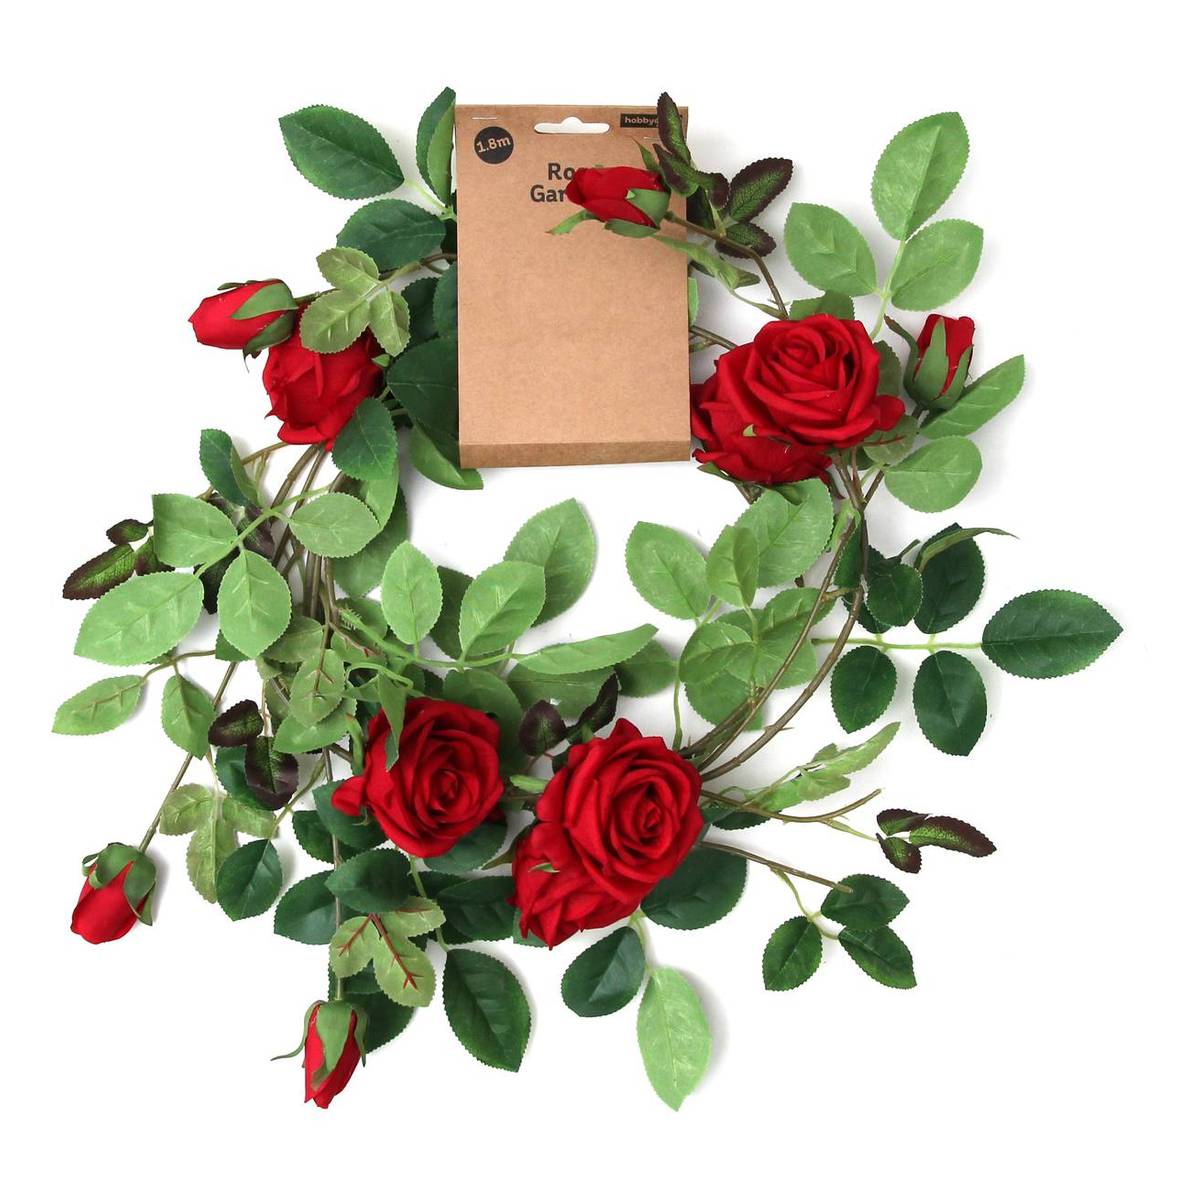 Buy Red Rose Garland 1.8m for GBP 12.00 | Hobbycraft UK